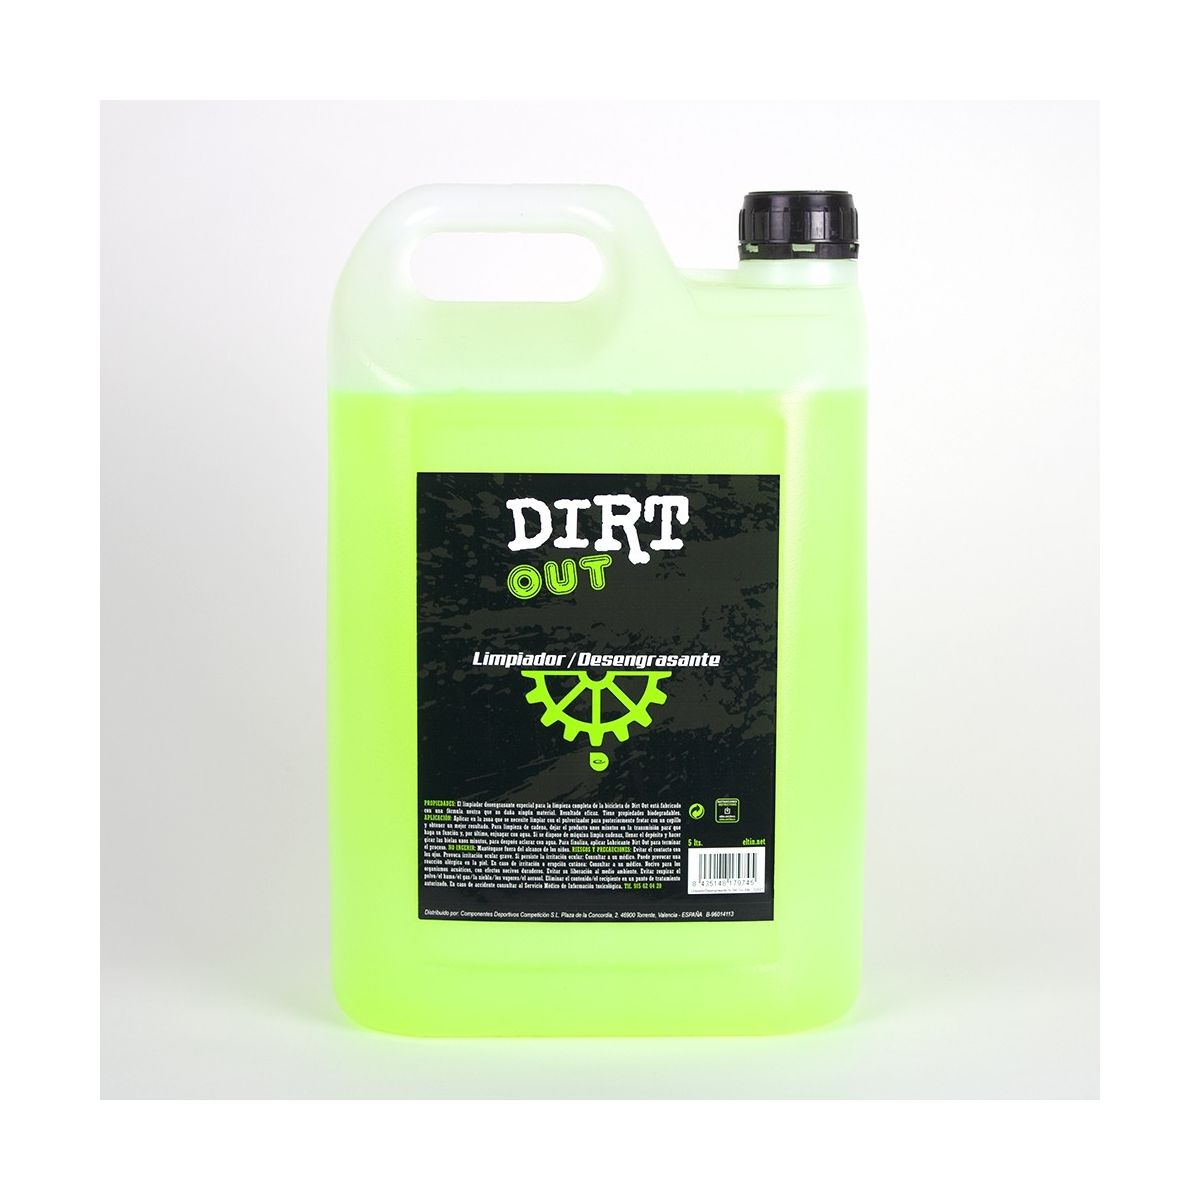 DirtOut - Limpiador/desengrasante 5L